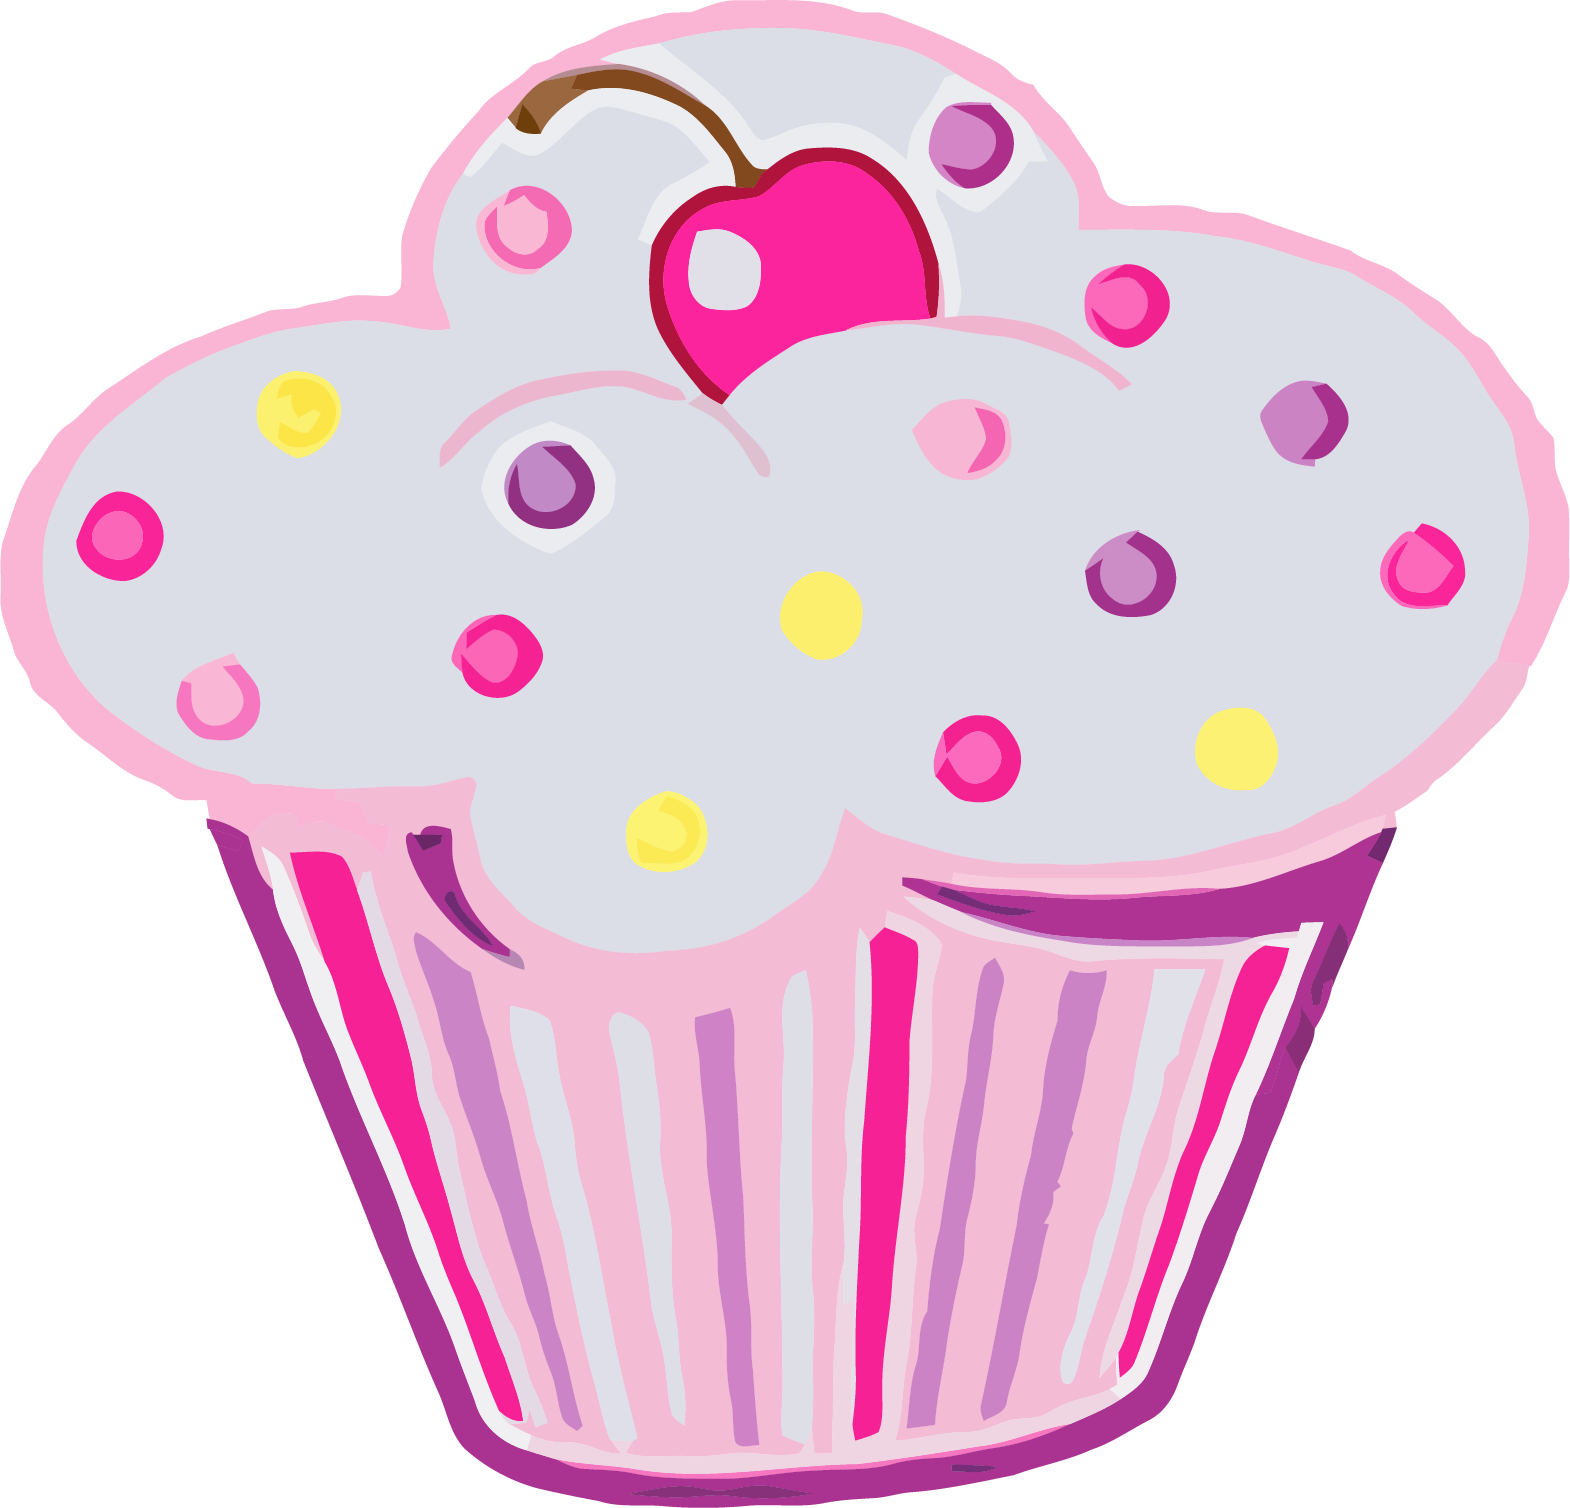 Cupcake Themed Birthday Party (1570x1508)